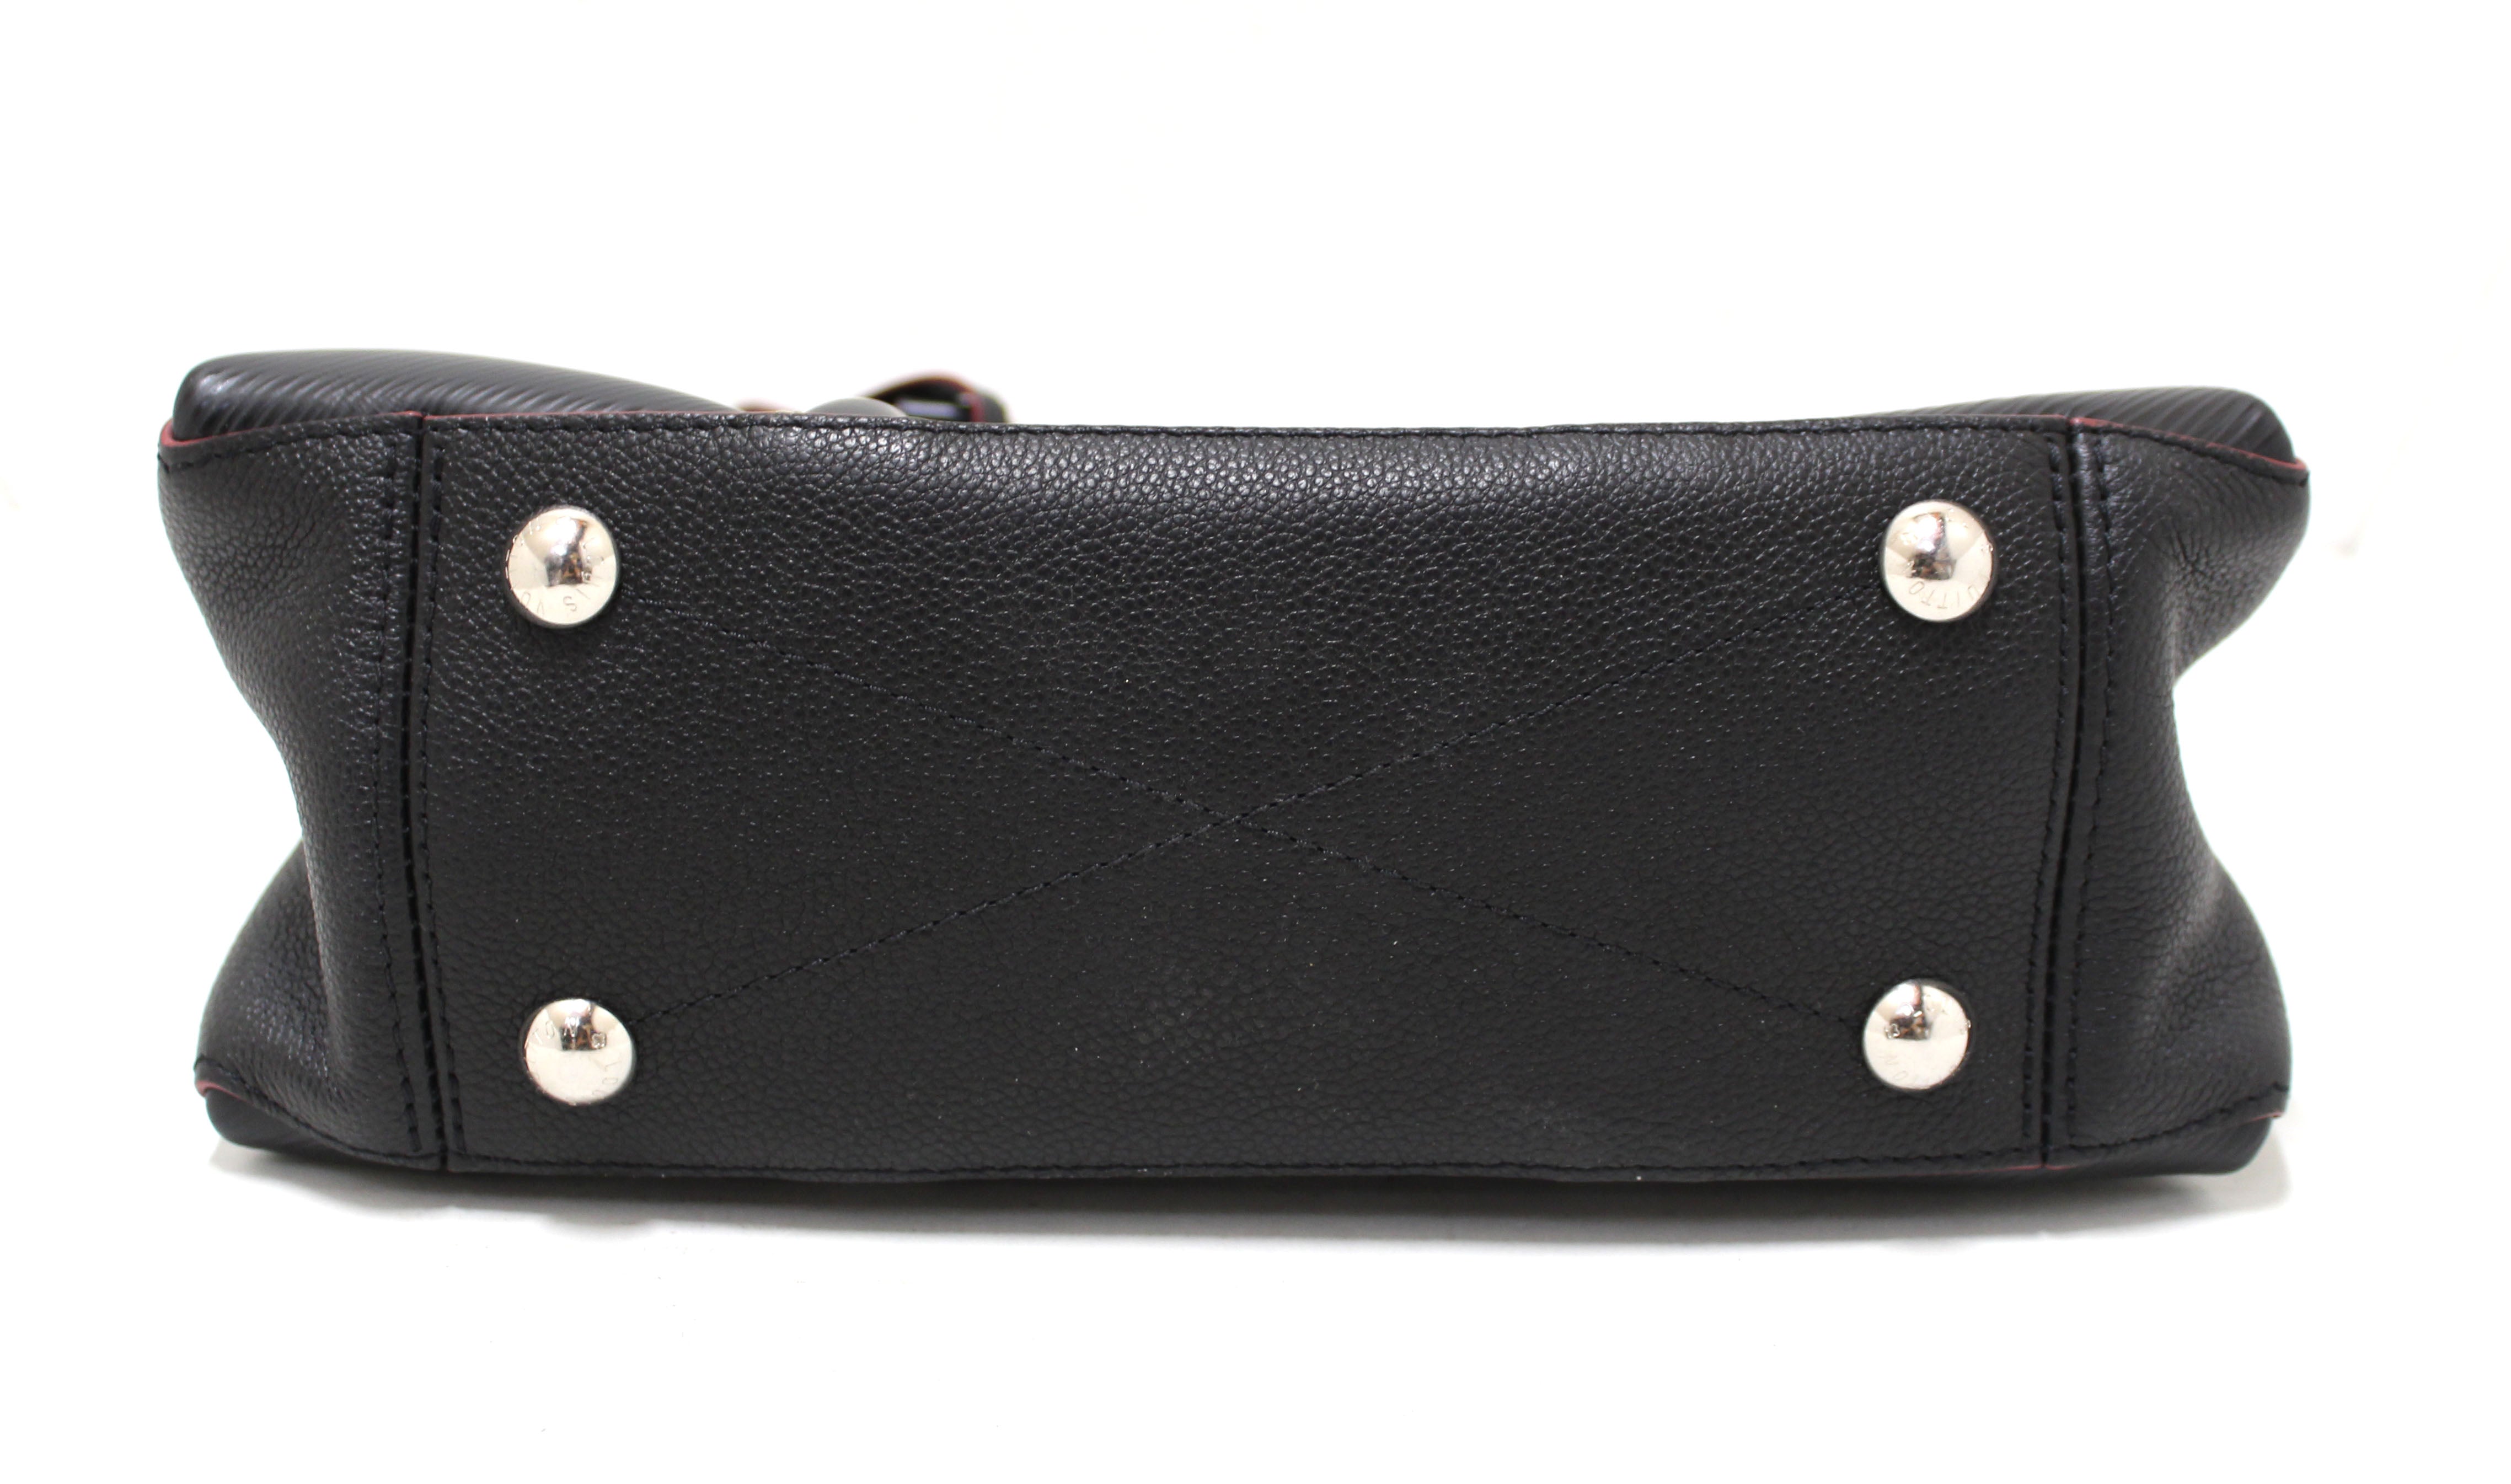 Soufflot leather handbag